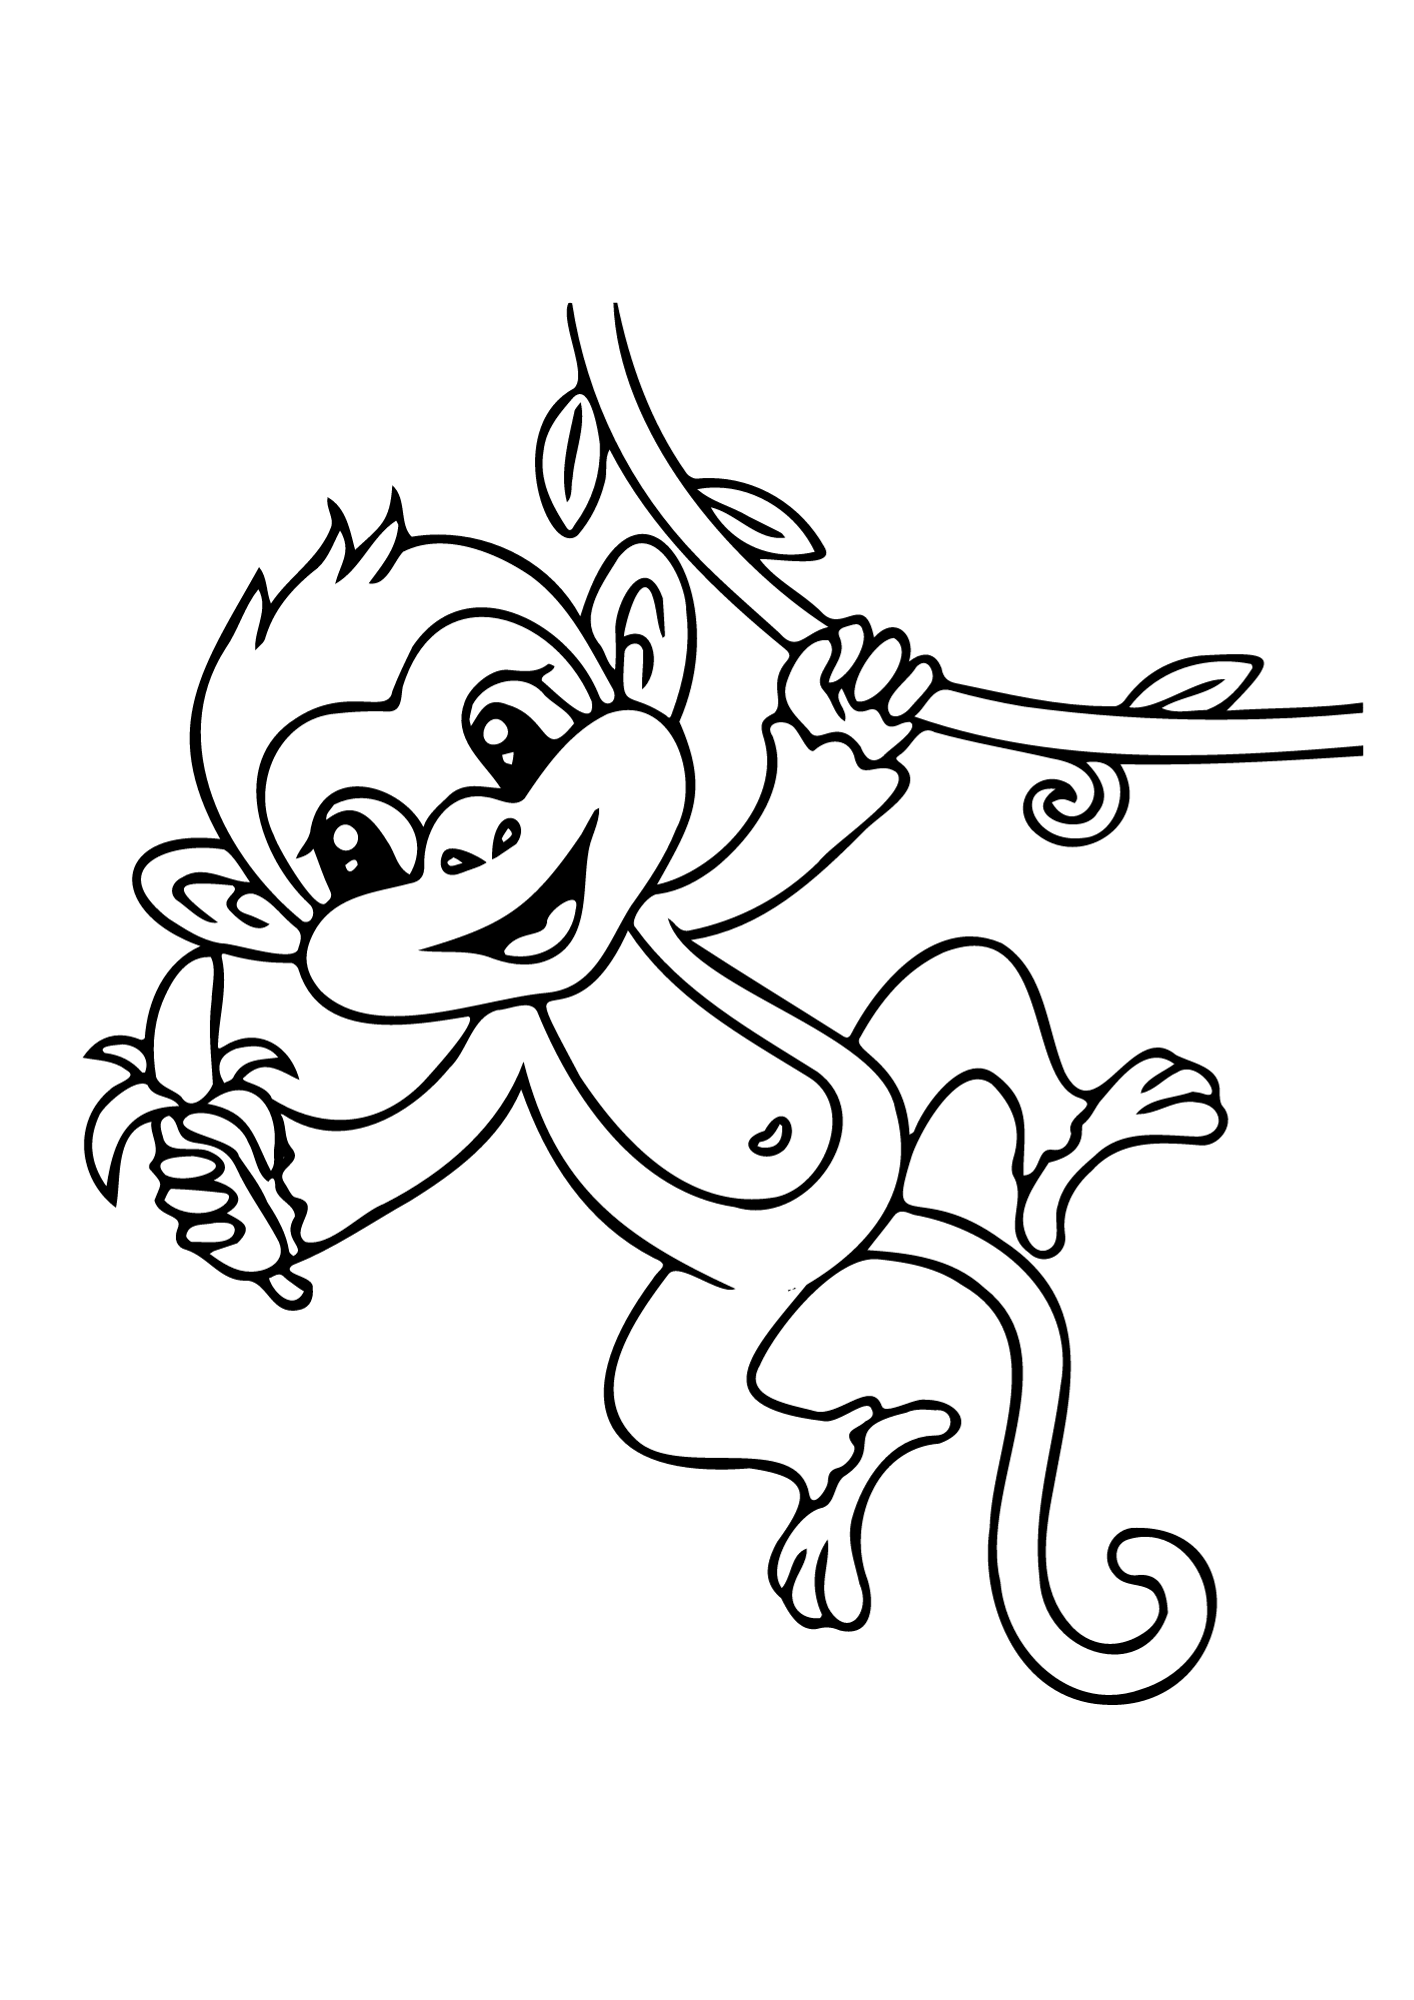 Monkey Eatting Banana Free Coloring Page